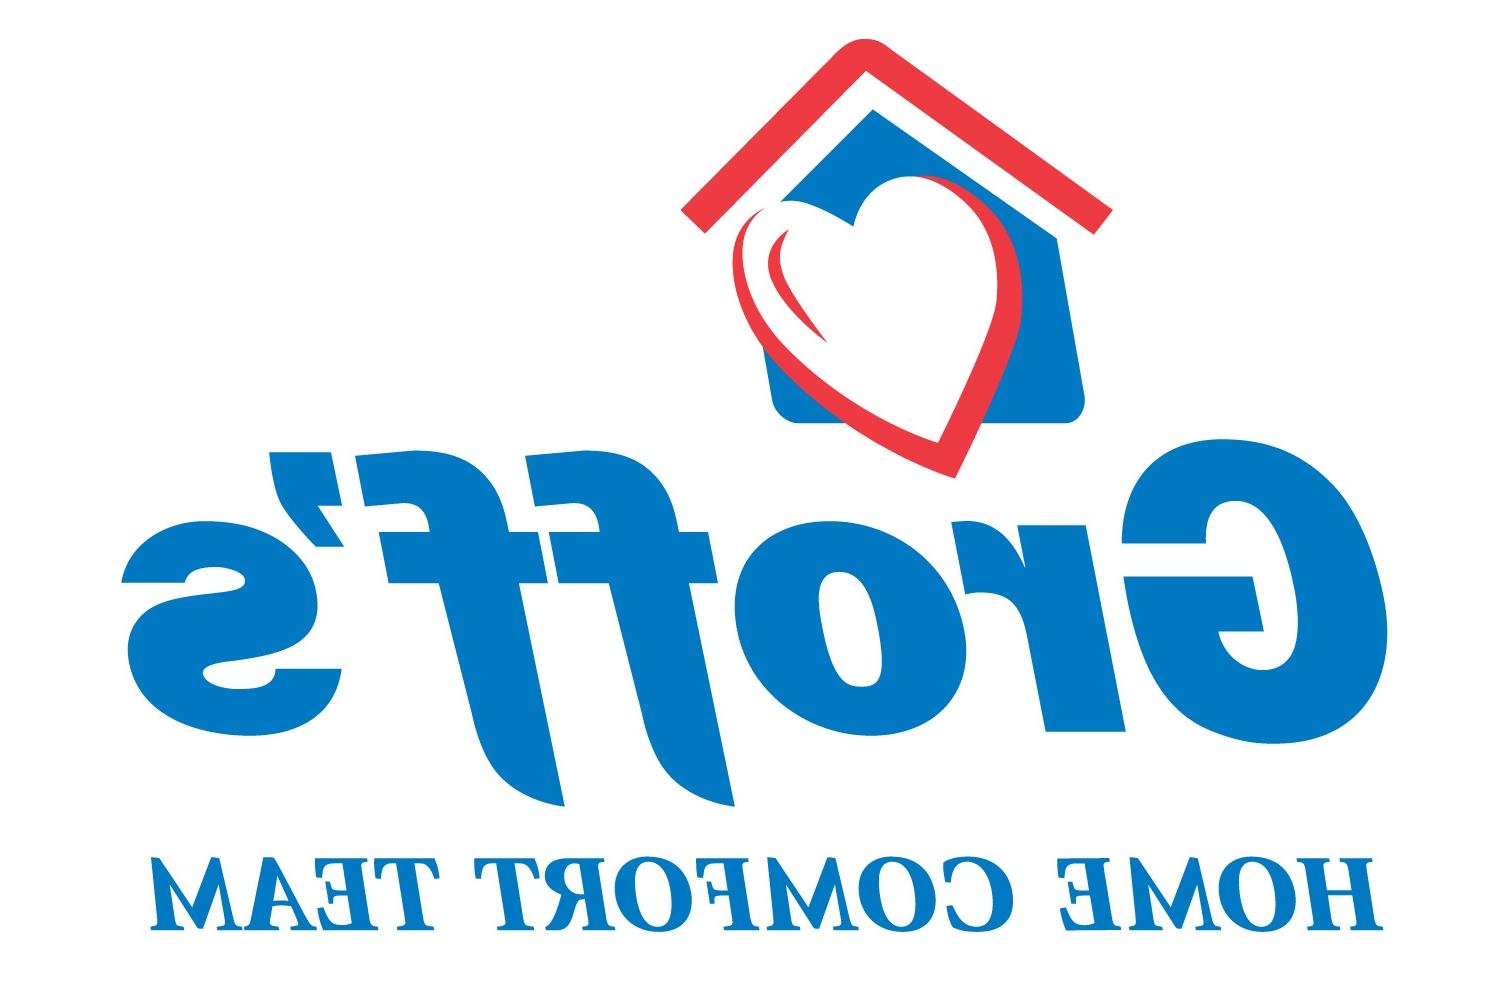 Groffs-Logo-jpg.jpg